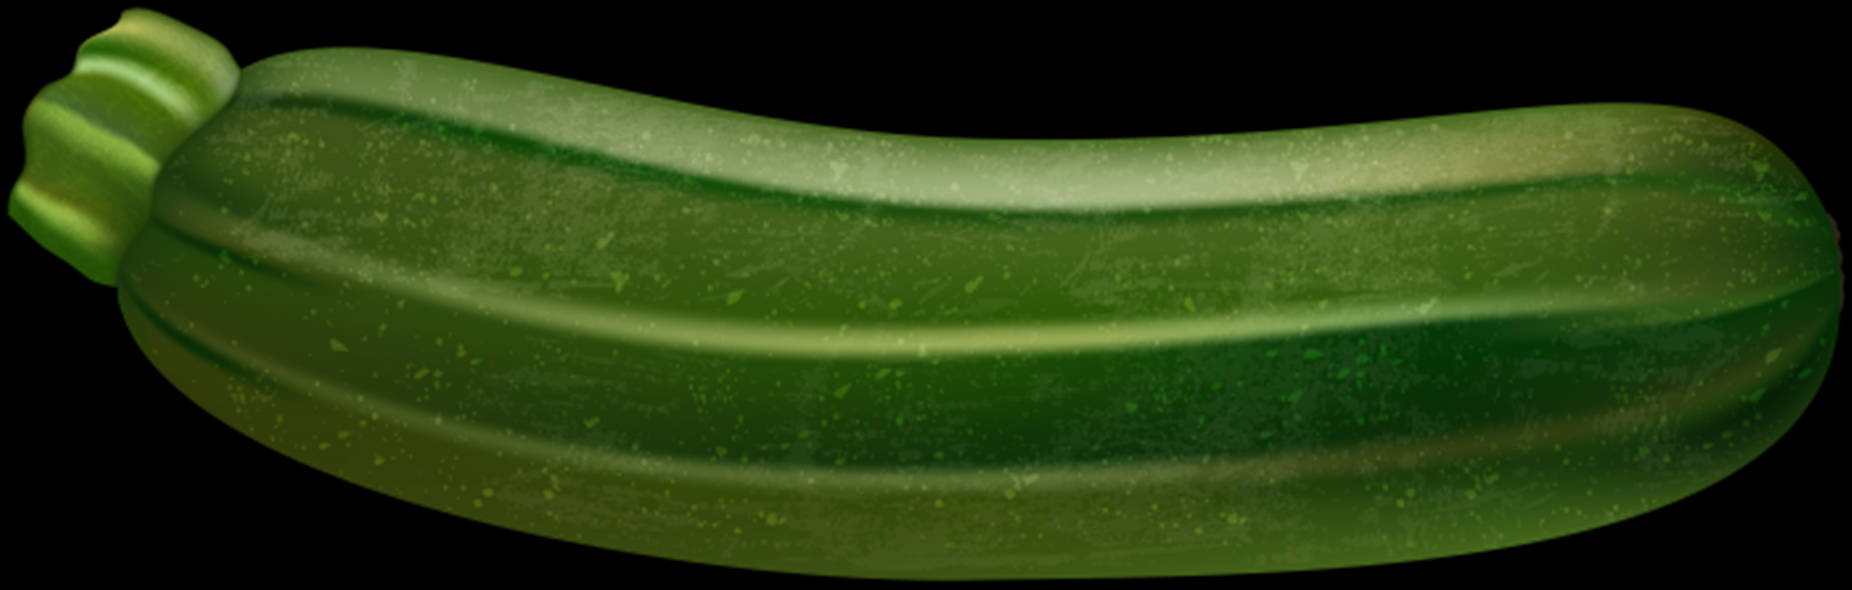 Zucchini Vining Vegetable Plant Wallpaper